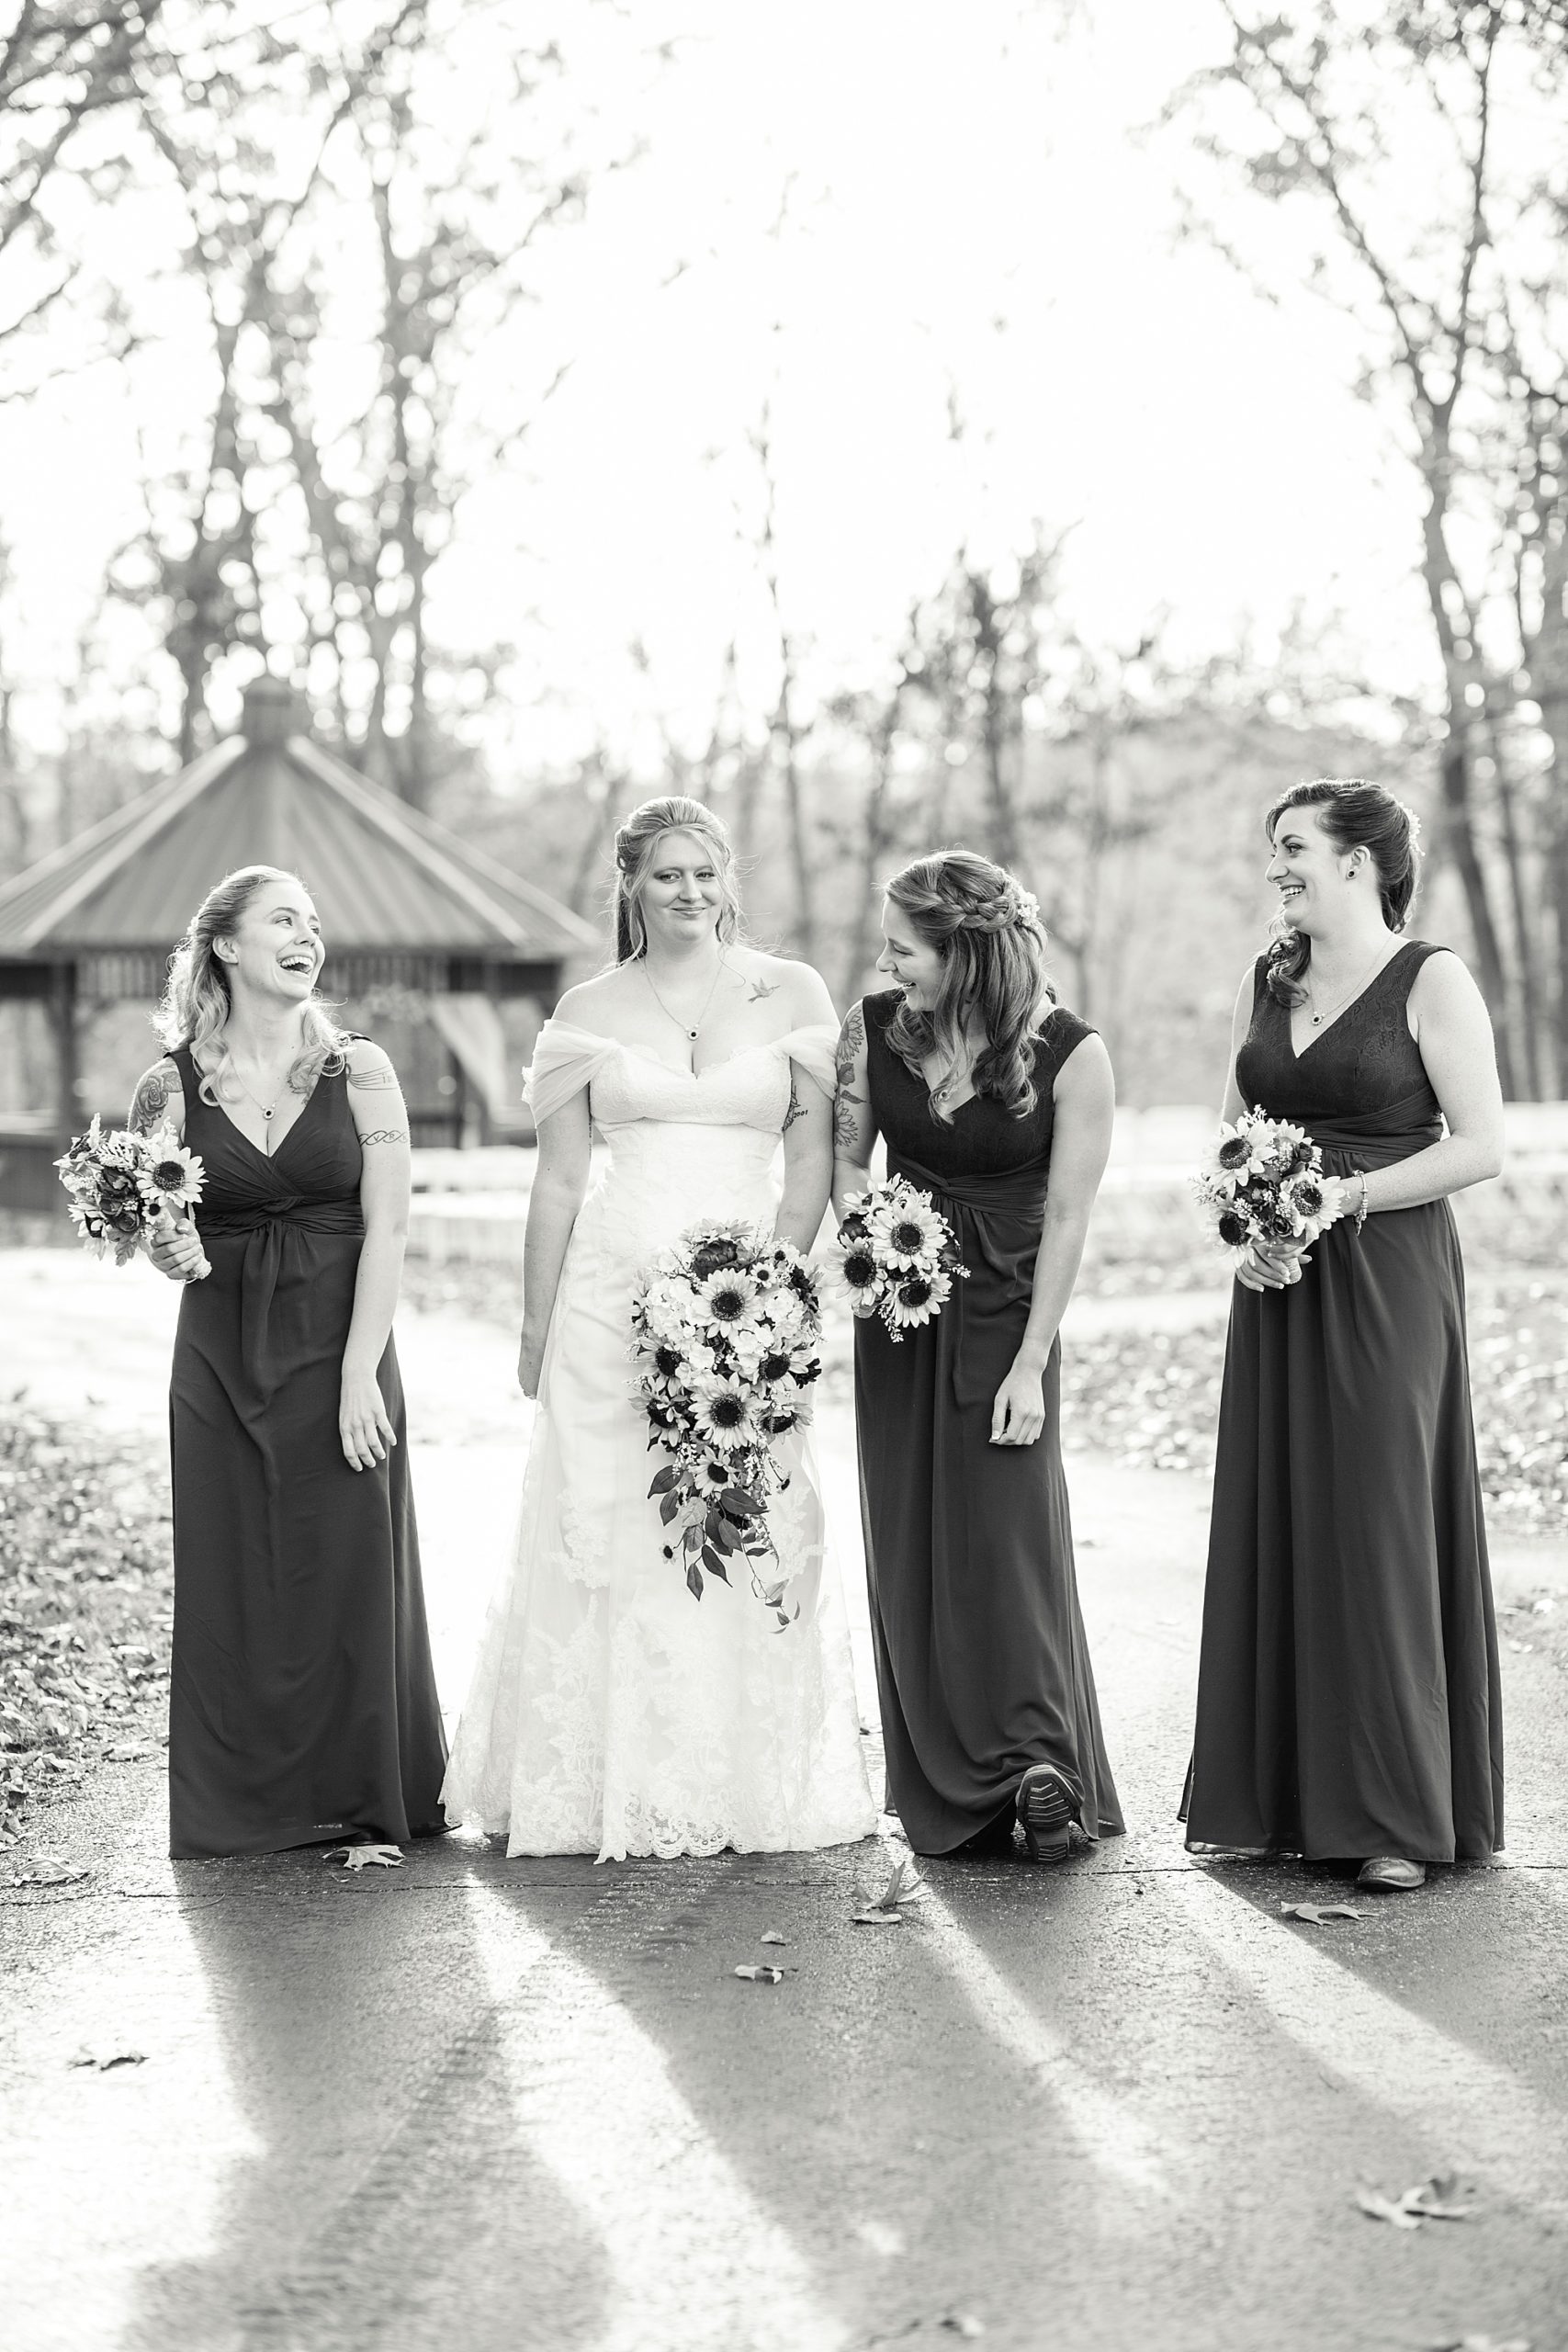 bride walks with bridesmaids holding sunfowers